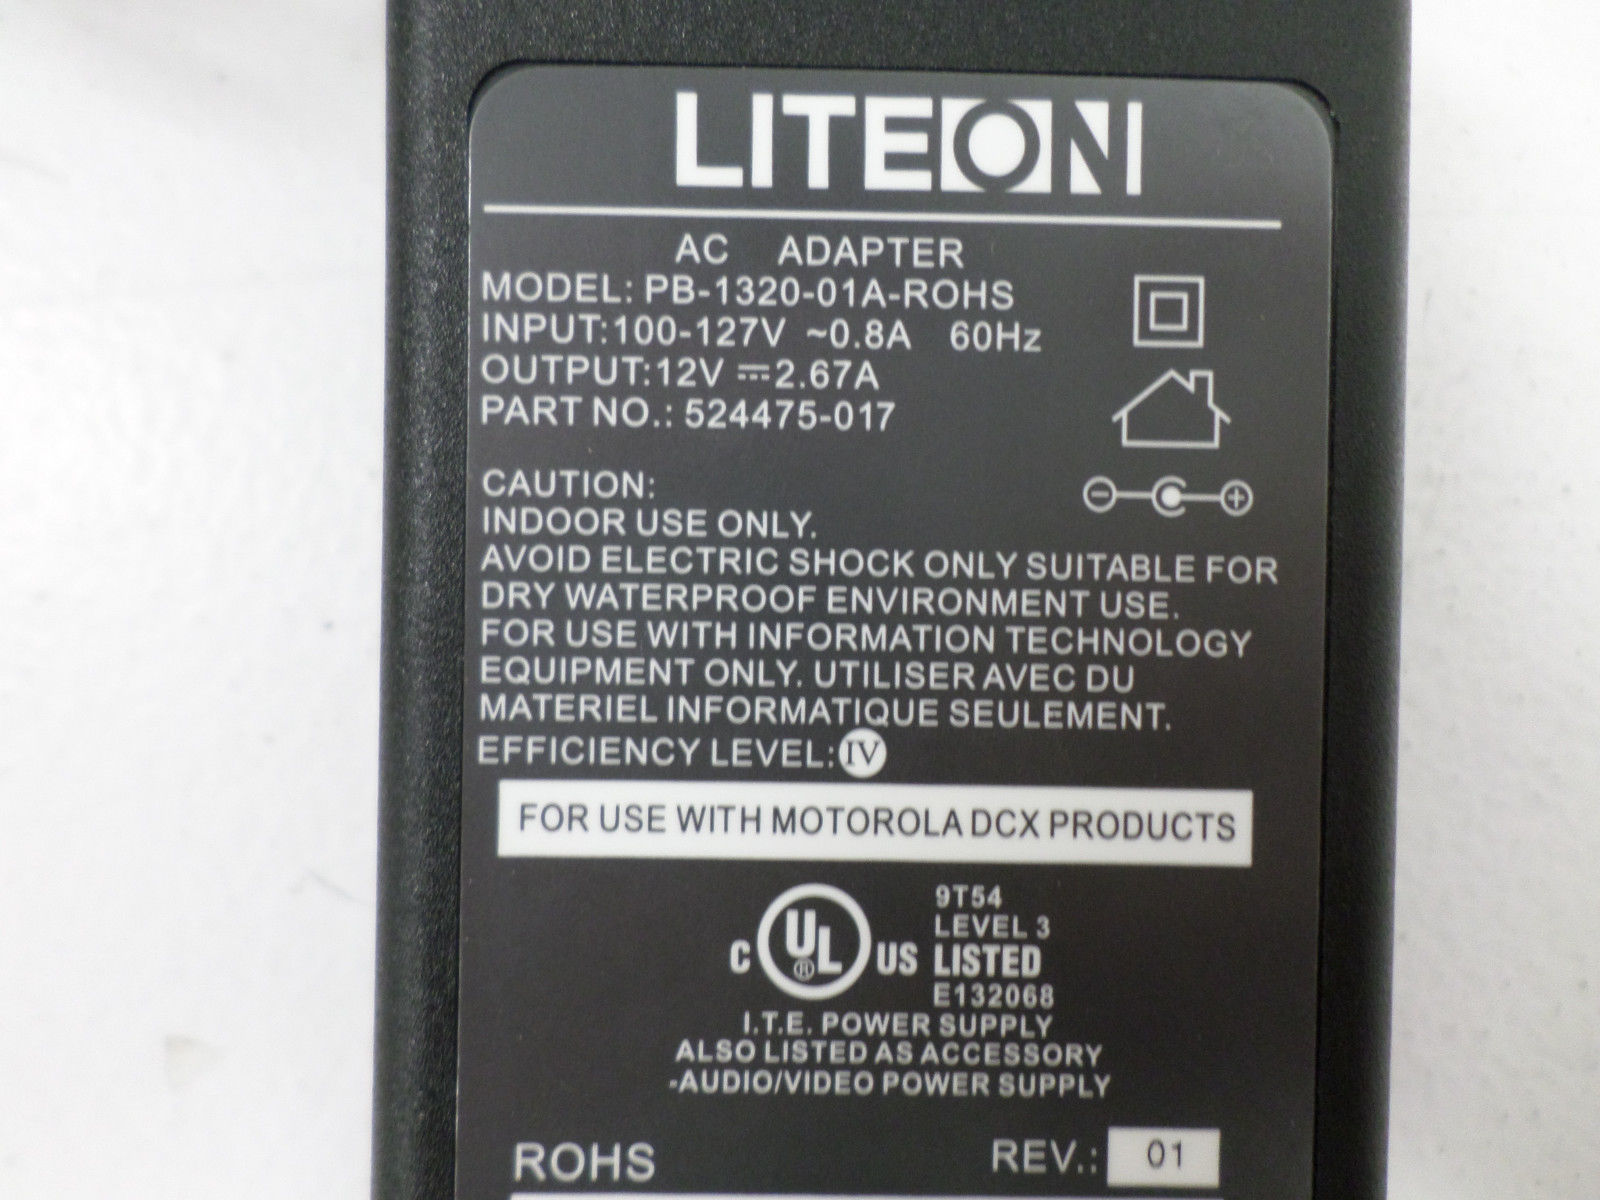 New LITEON PB-1320-01A-ROHS 12V 2.67A 524475-017 AC Adapter